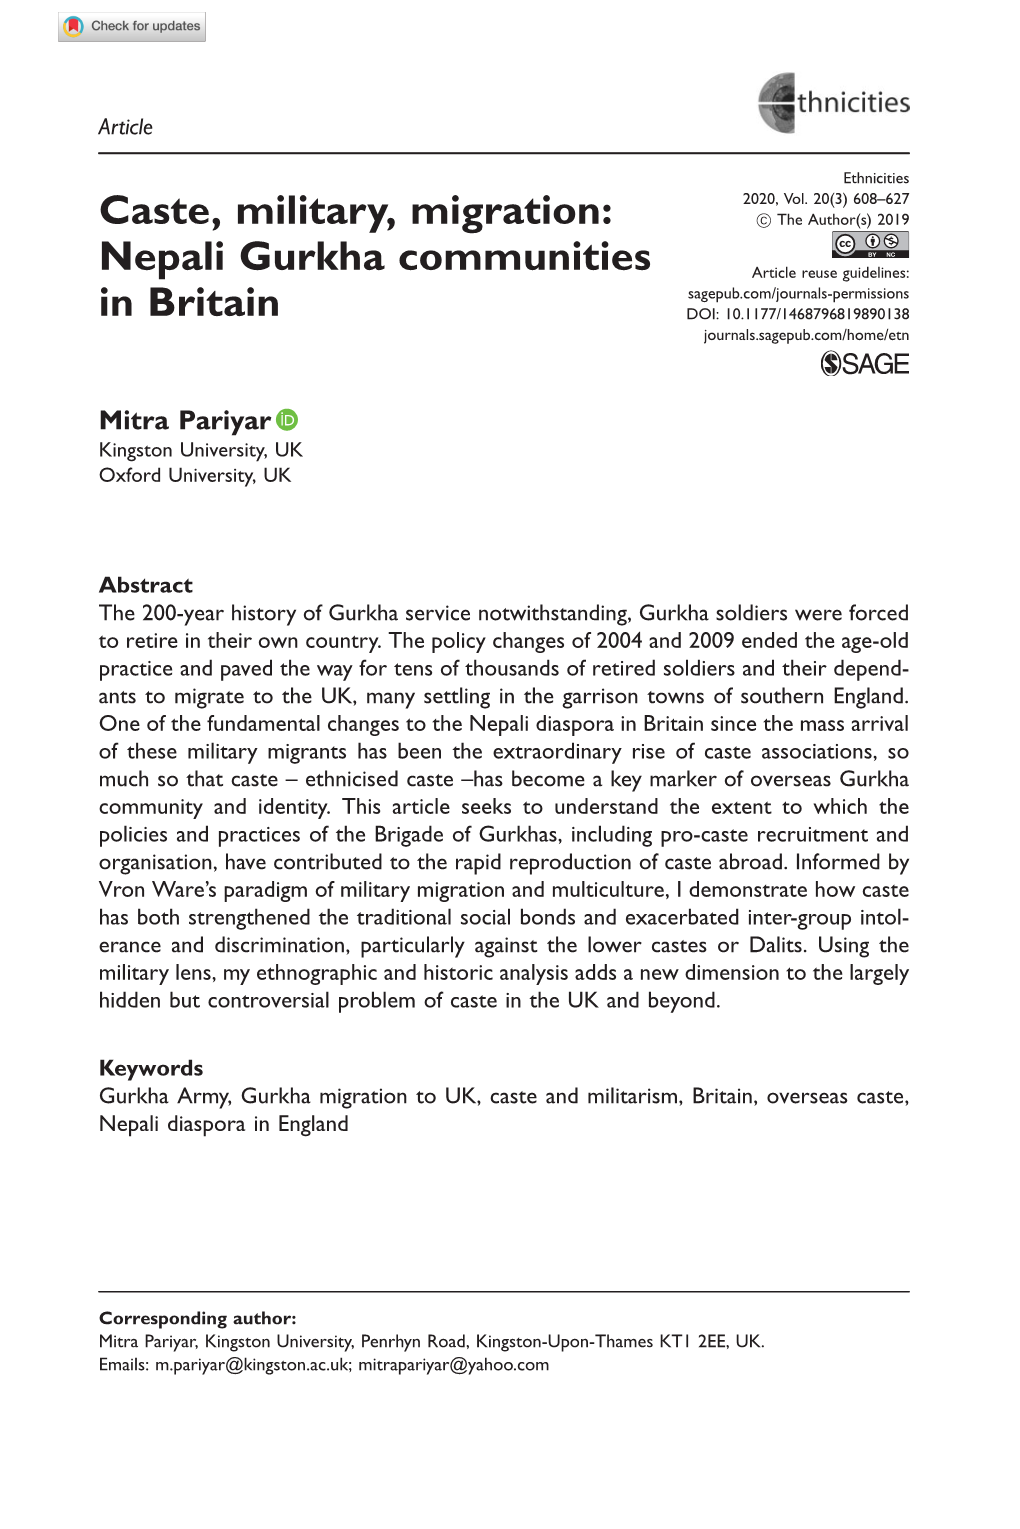 Caste, Military, Migration: Nepali Gurkha Communities in Britain